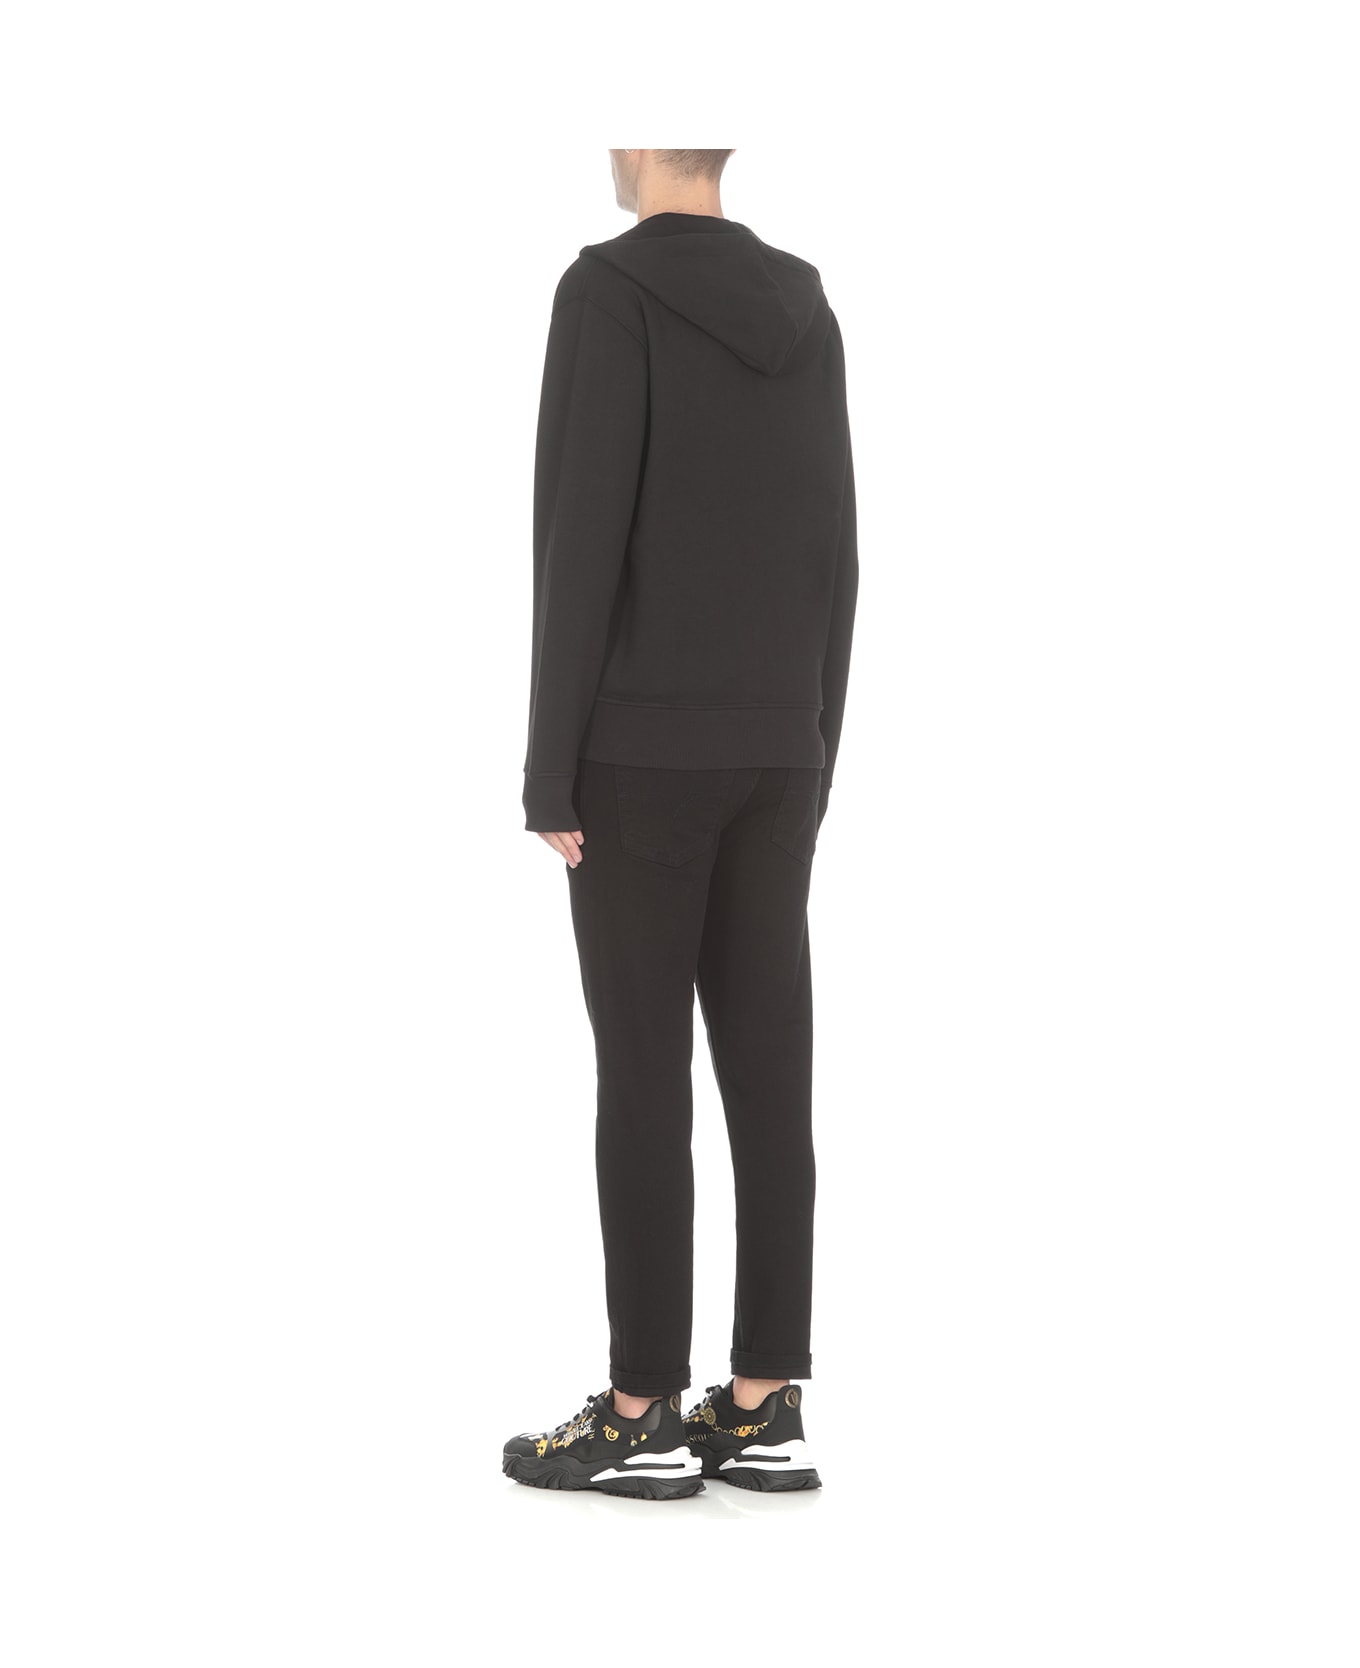 Versace Jeans Couture Logoed Sweatshirt - Black フリース